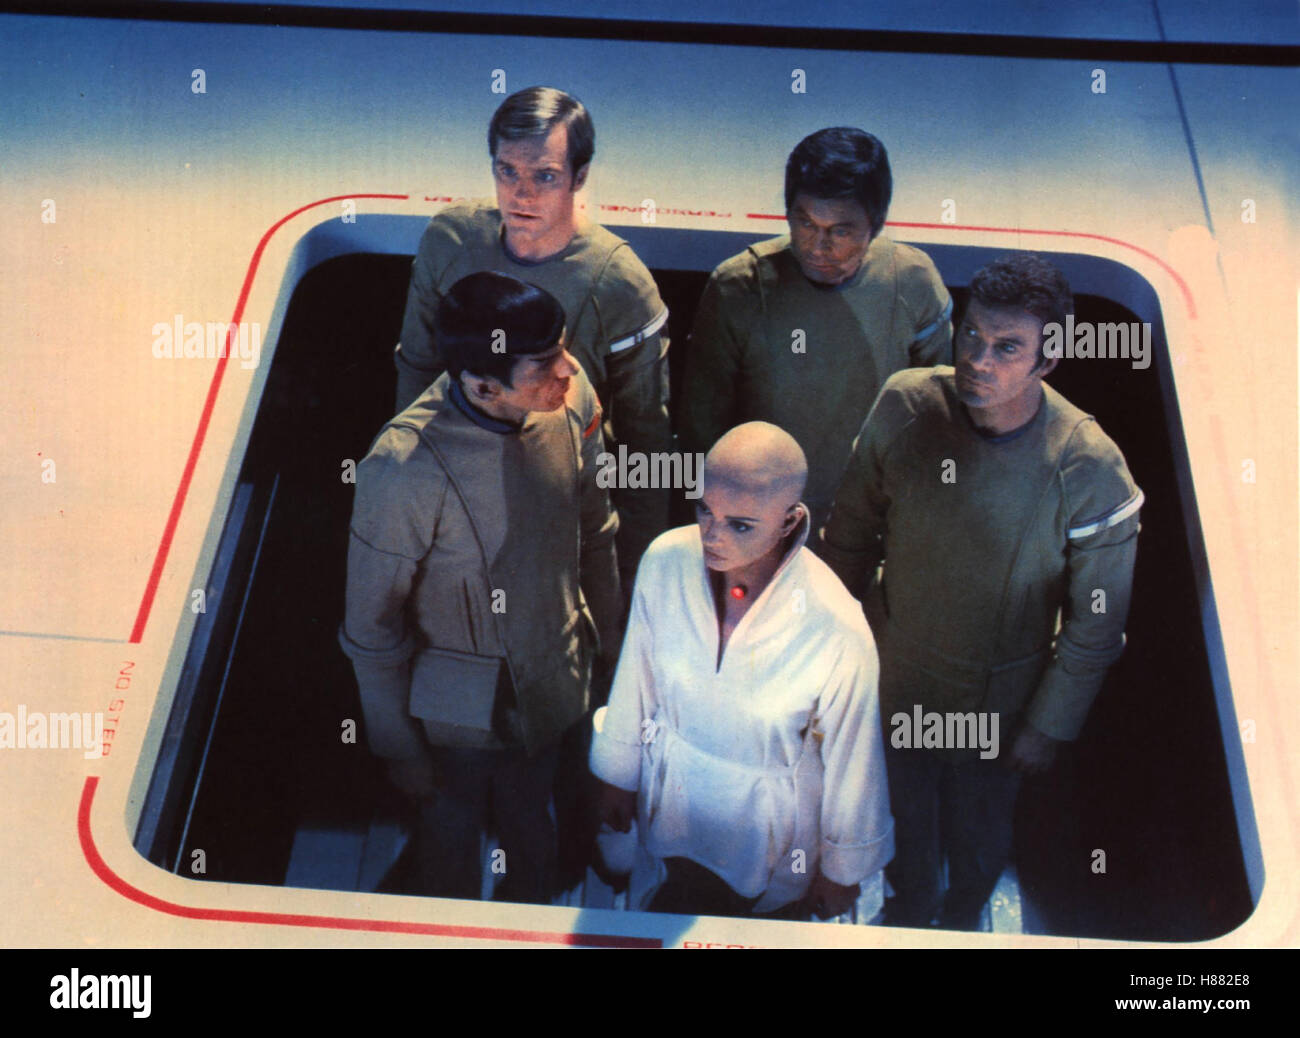 Star Trek - Der Film, (STAR TREK - THE MOTION PICTURE) USA 1978, Robert Wise, v.l.: LEONARD NIMOY, JAMES DOOHAN, NICHELLE NICHOLS, DeFOREST KELLEY, WILLIAM SHATNER Stock Photo